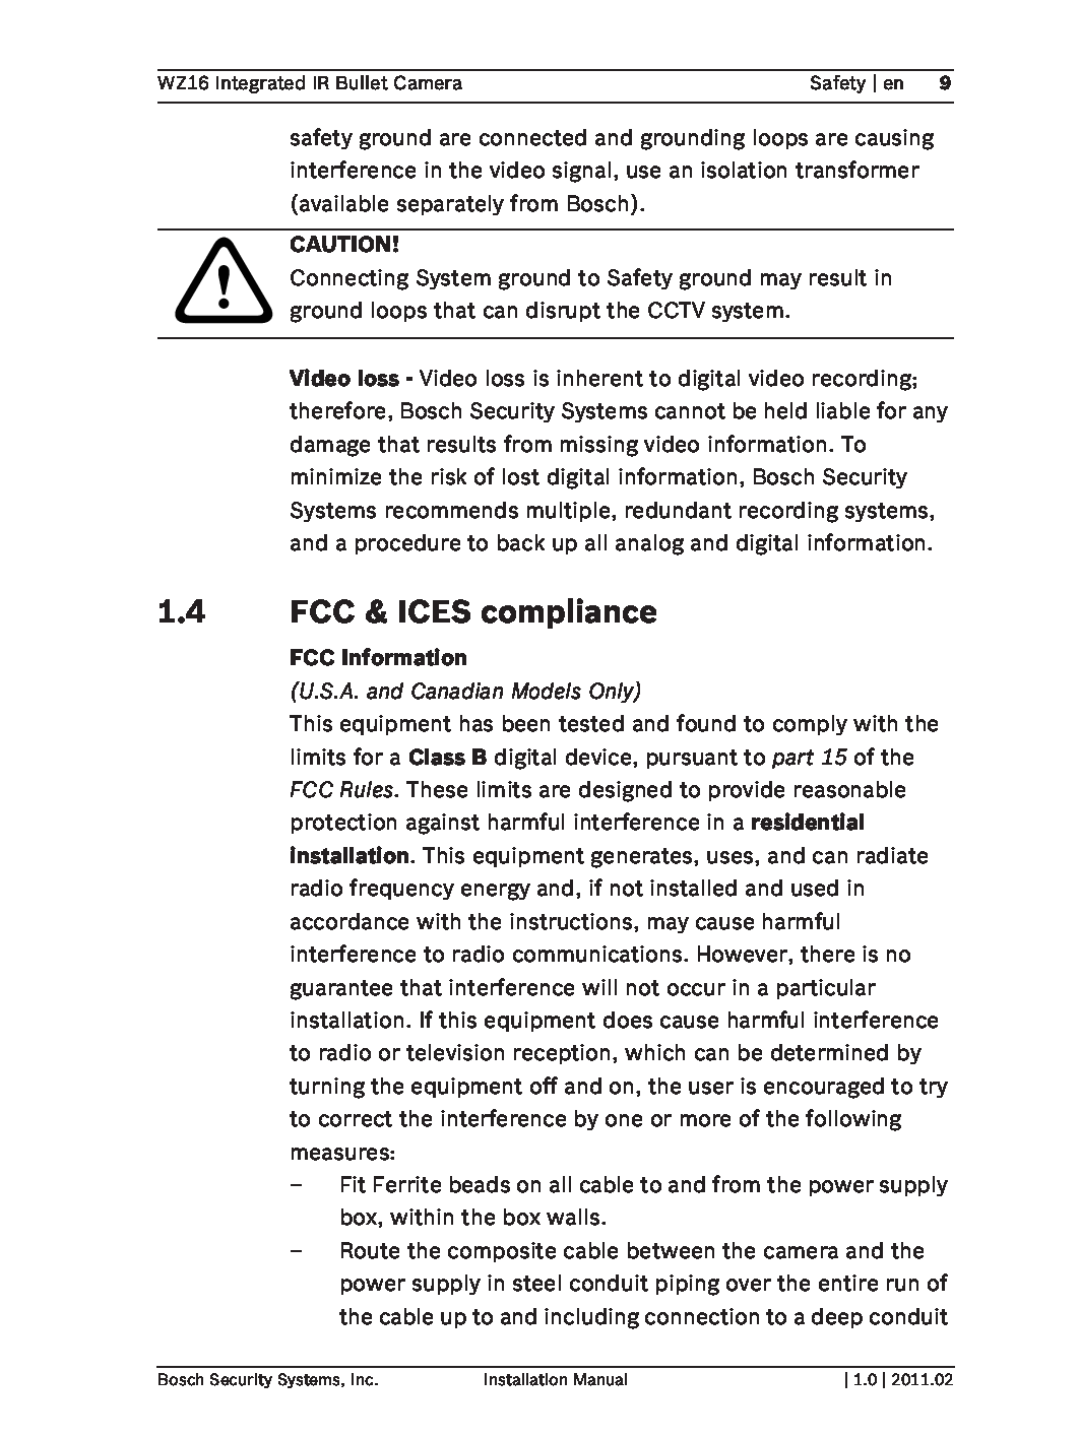 Bosch Appliances WZ16 installation manual 1.4FCC & ICES compliance, FCC Information 